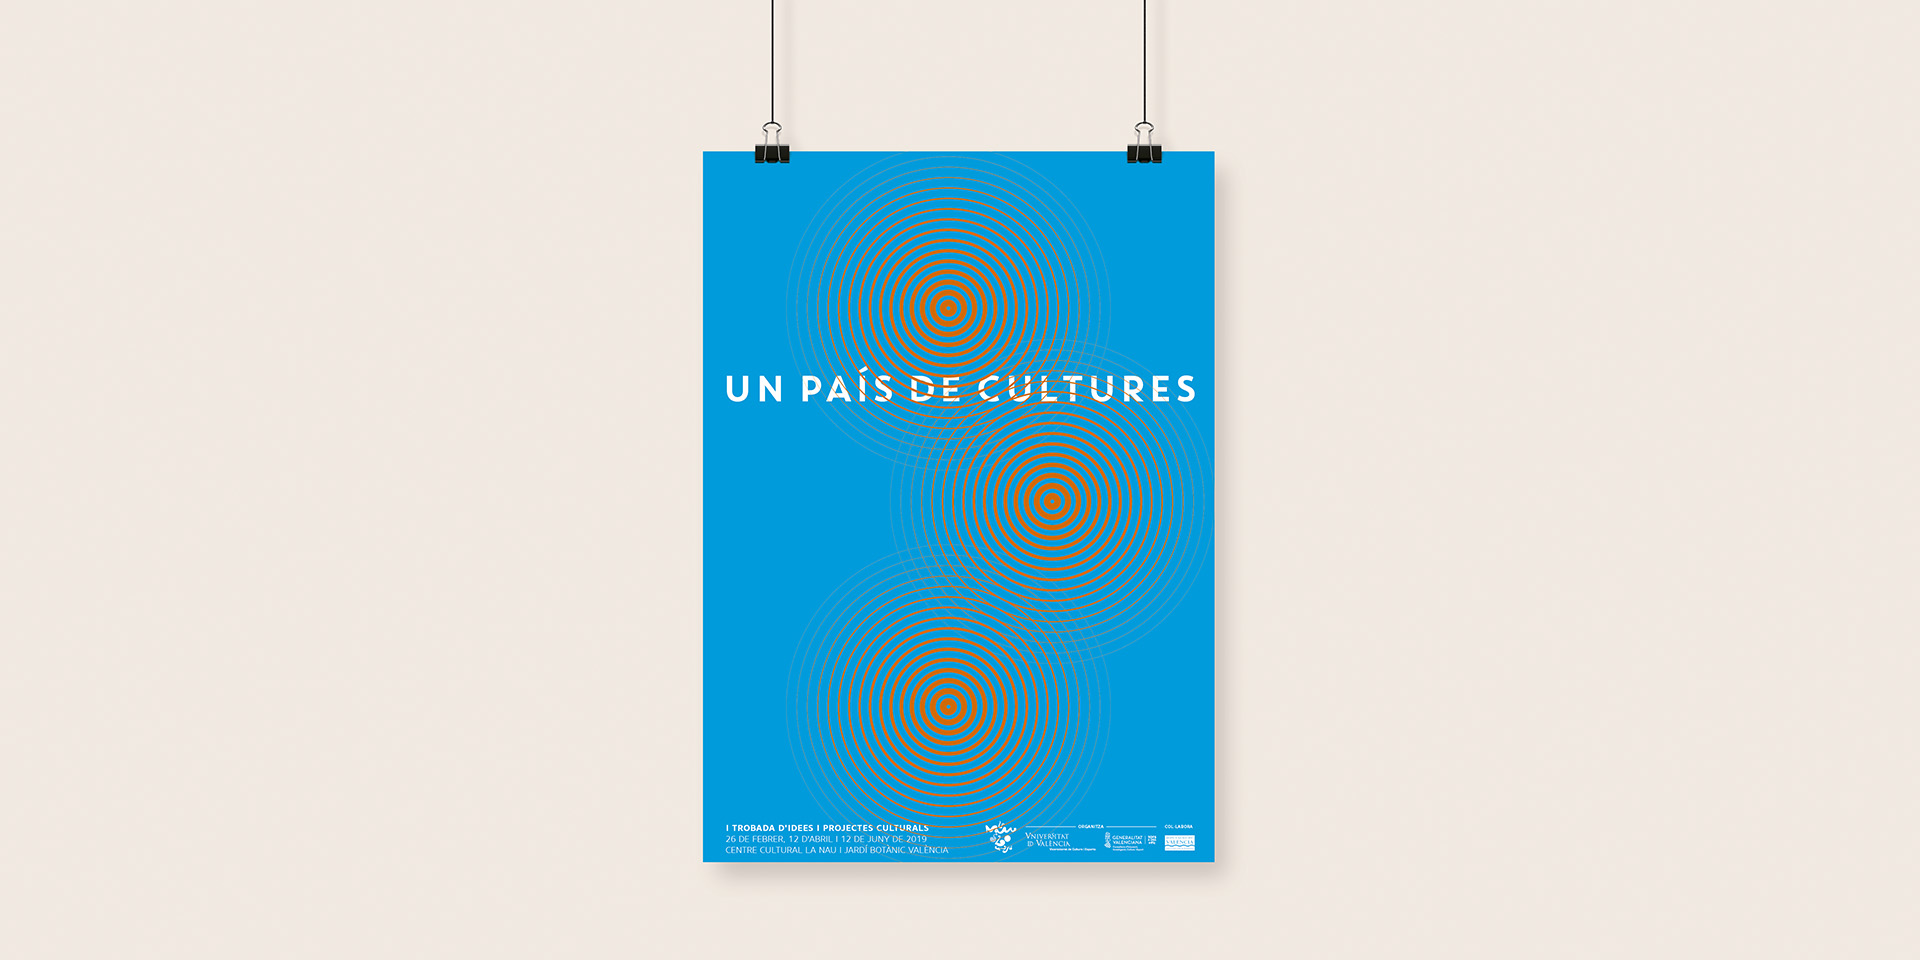 Diseño de la imagen “Un País de Cultures”